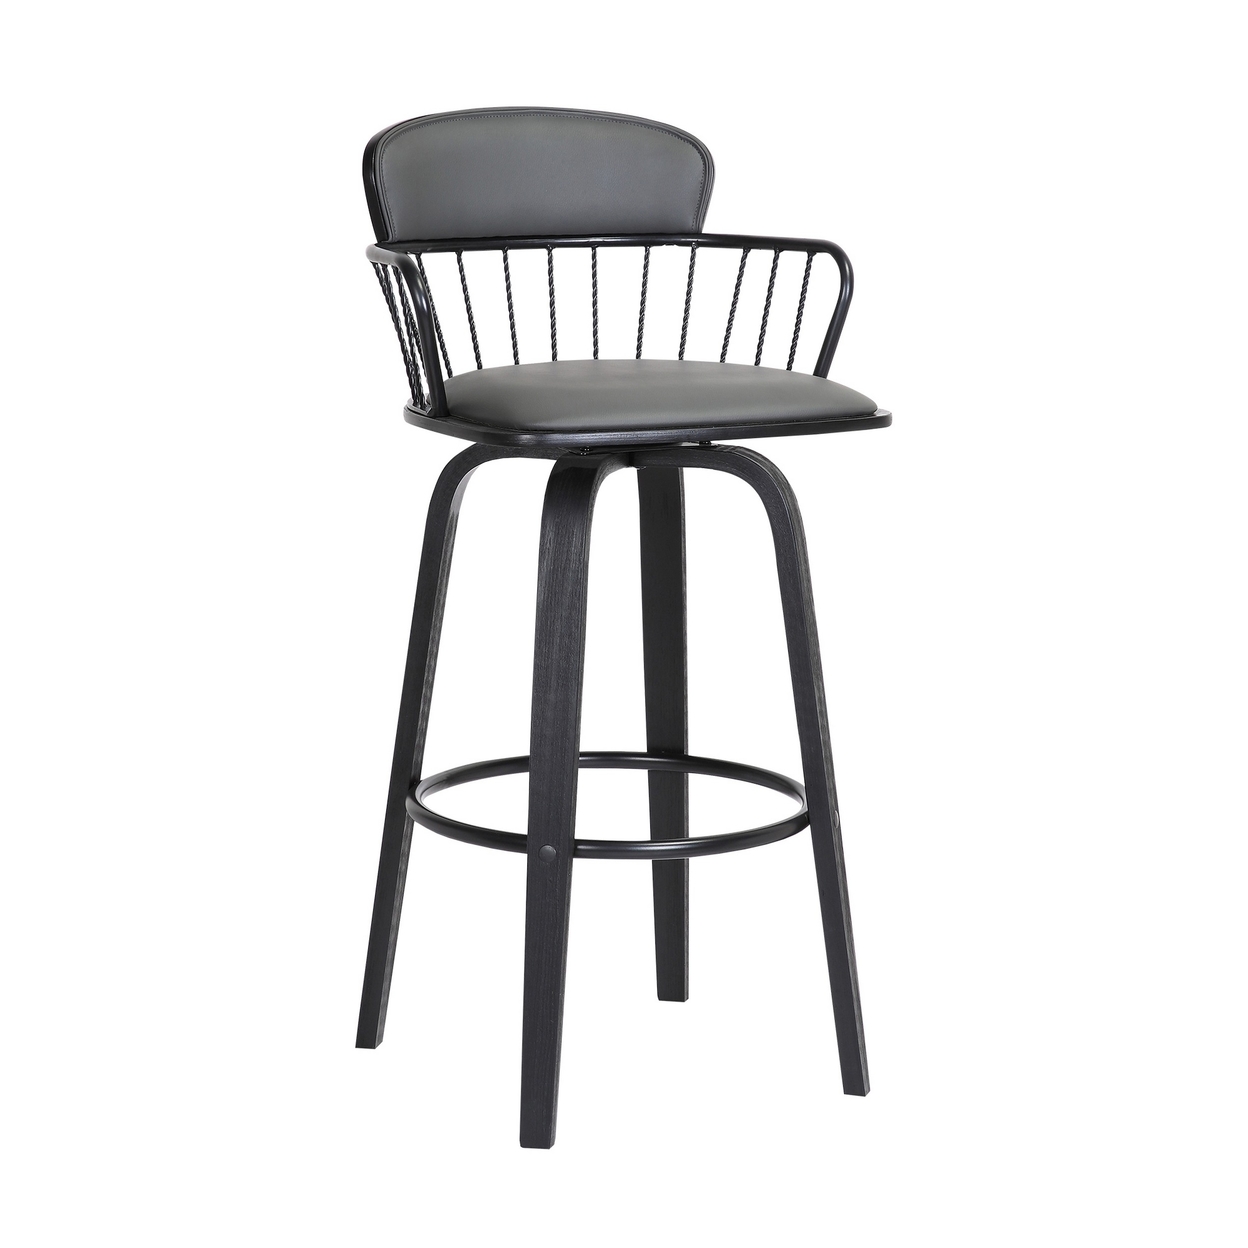 Wiz 26 Inch Counter Stool Chair, Slatted, Gray Faux Leather, Black Wood - Saltoro Sherpi